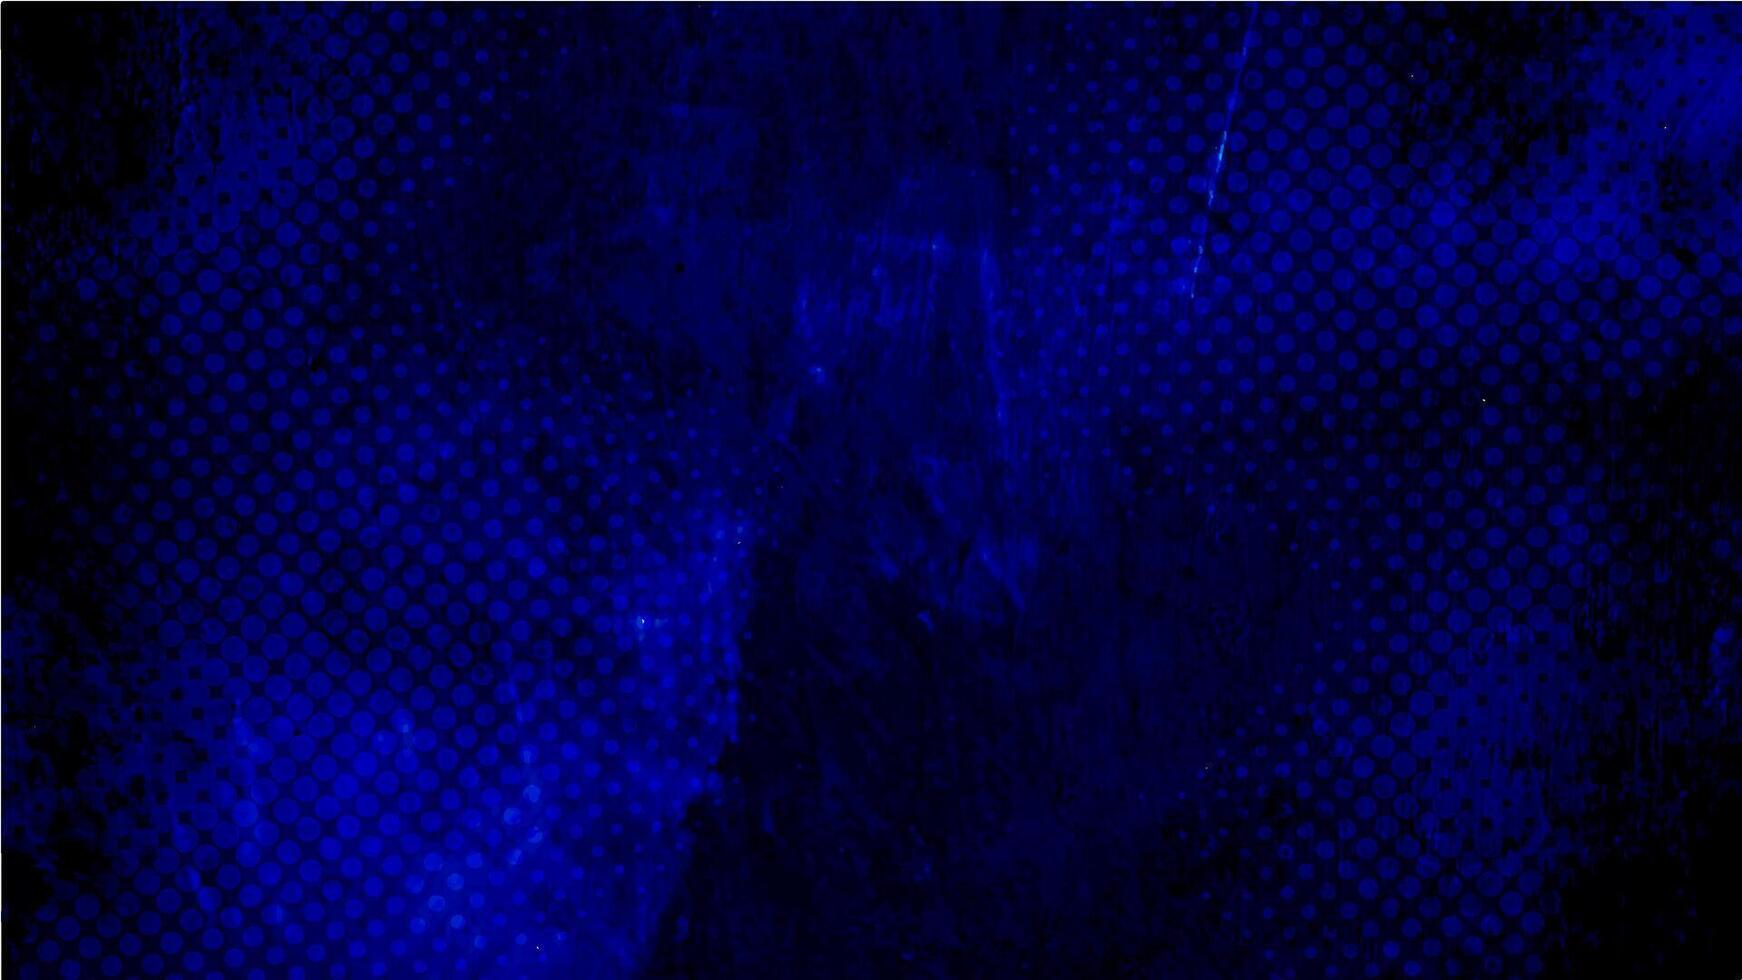 oscuro azul grunge textura antecedentes con Perfecto para creando resumen obra de arte, antecedentes para sitios web o social medios de comunicación publicaciones, y vibrante diseños para impresión materiales vector